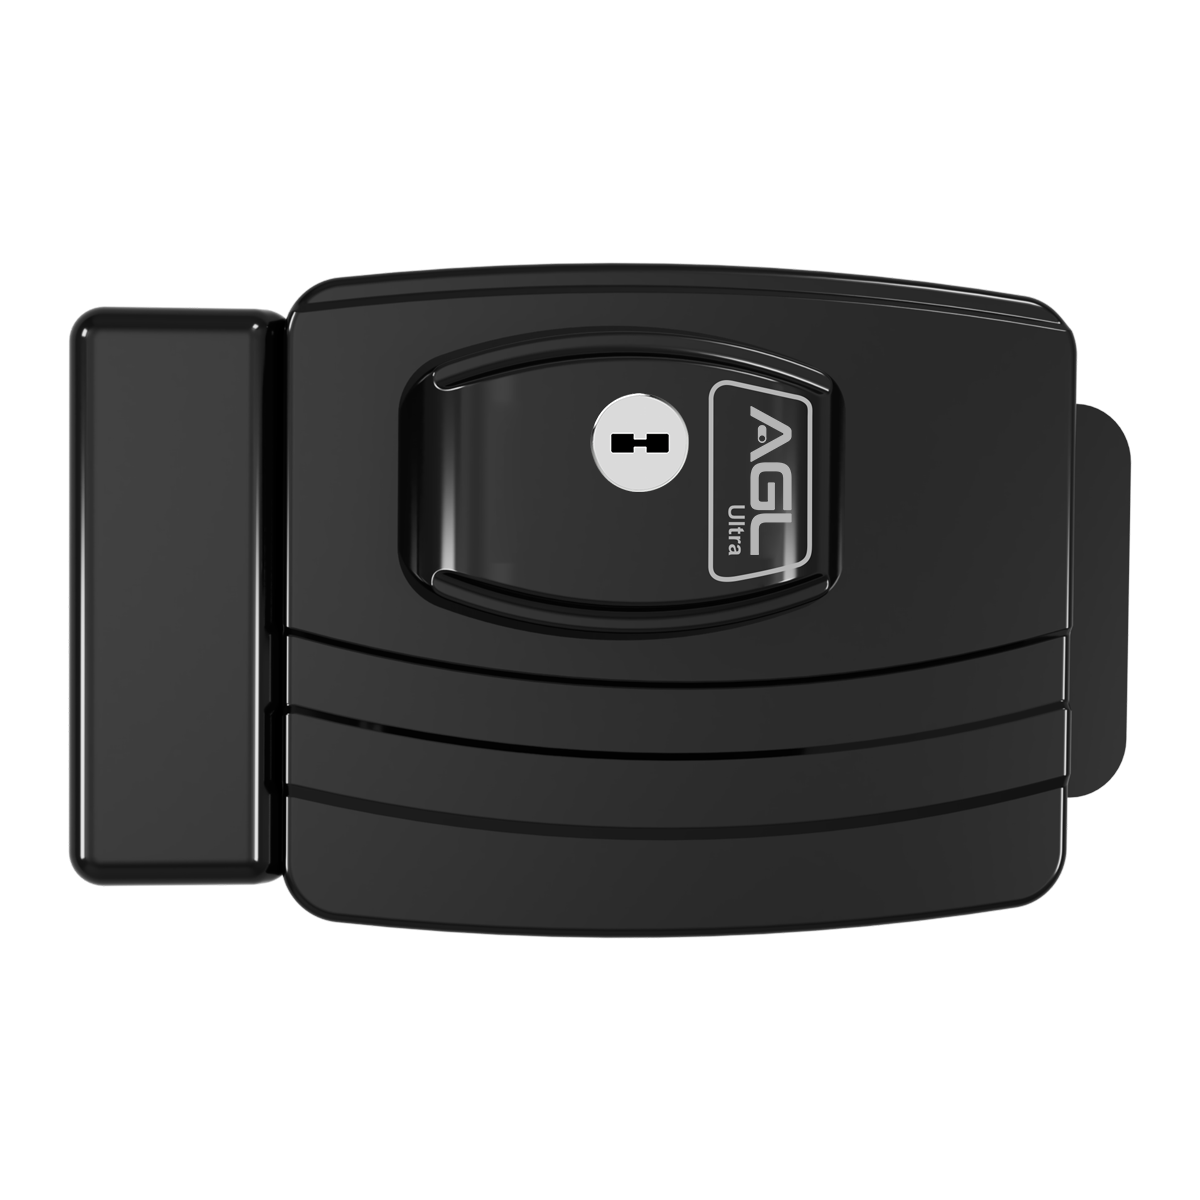 Fechadora ultra 42mm chave e-code preta AGL - 2